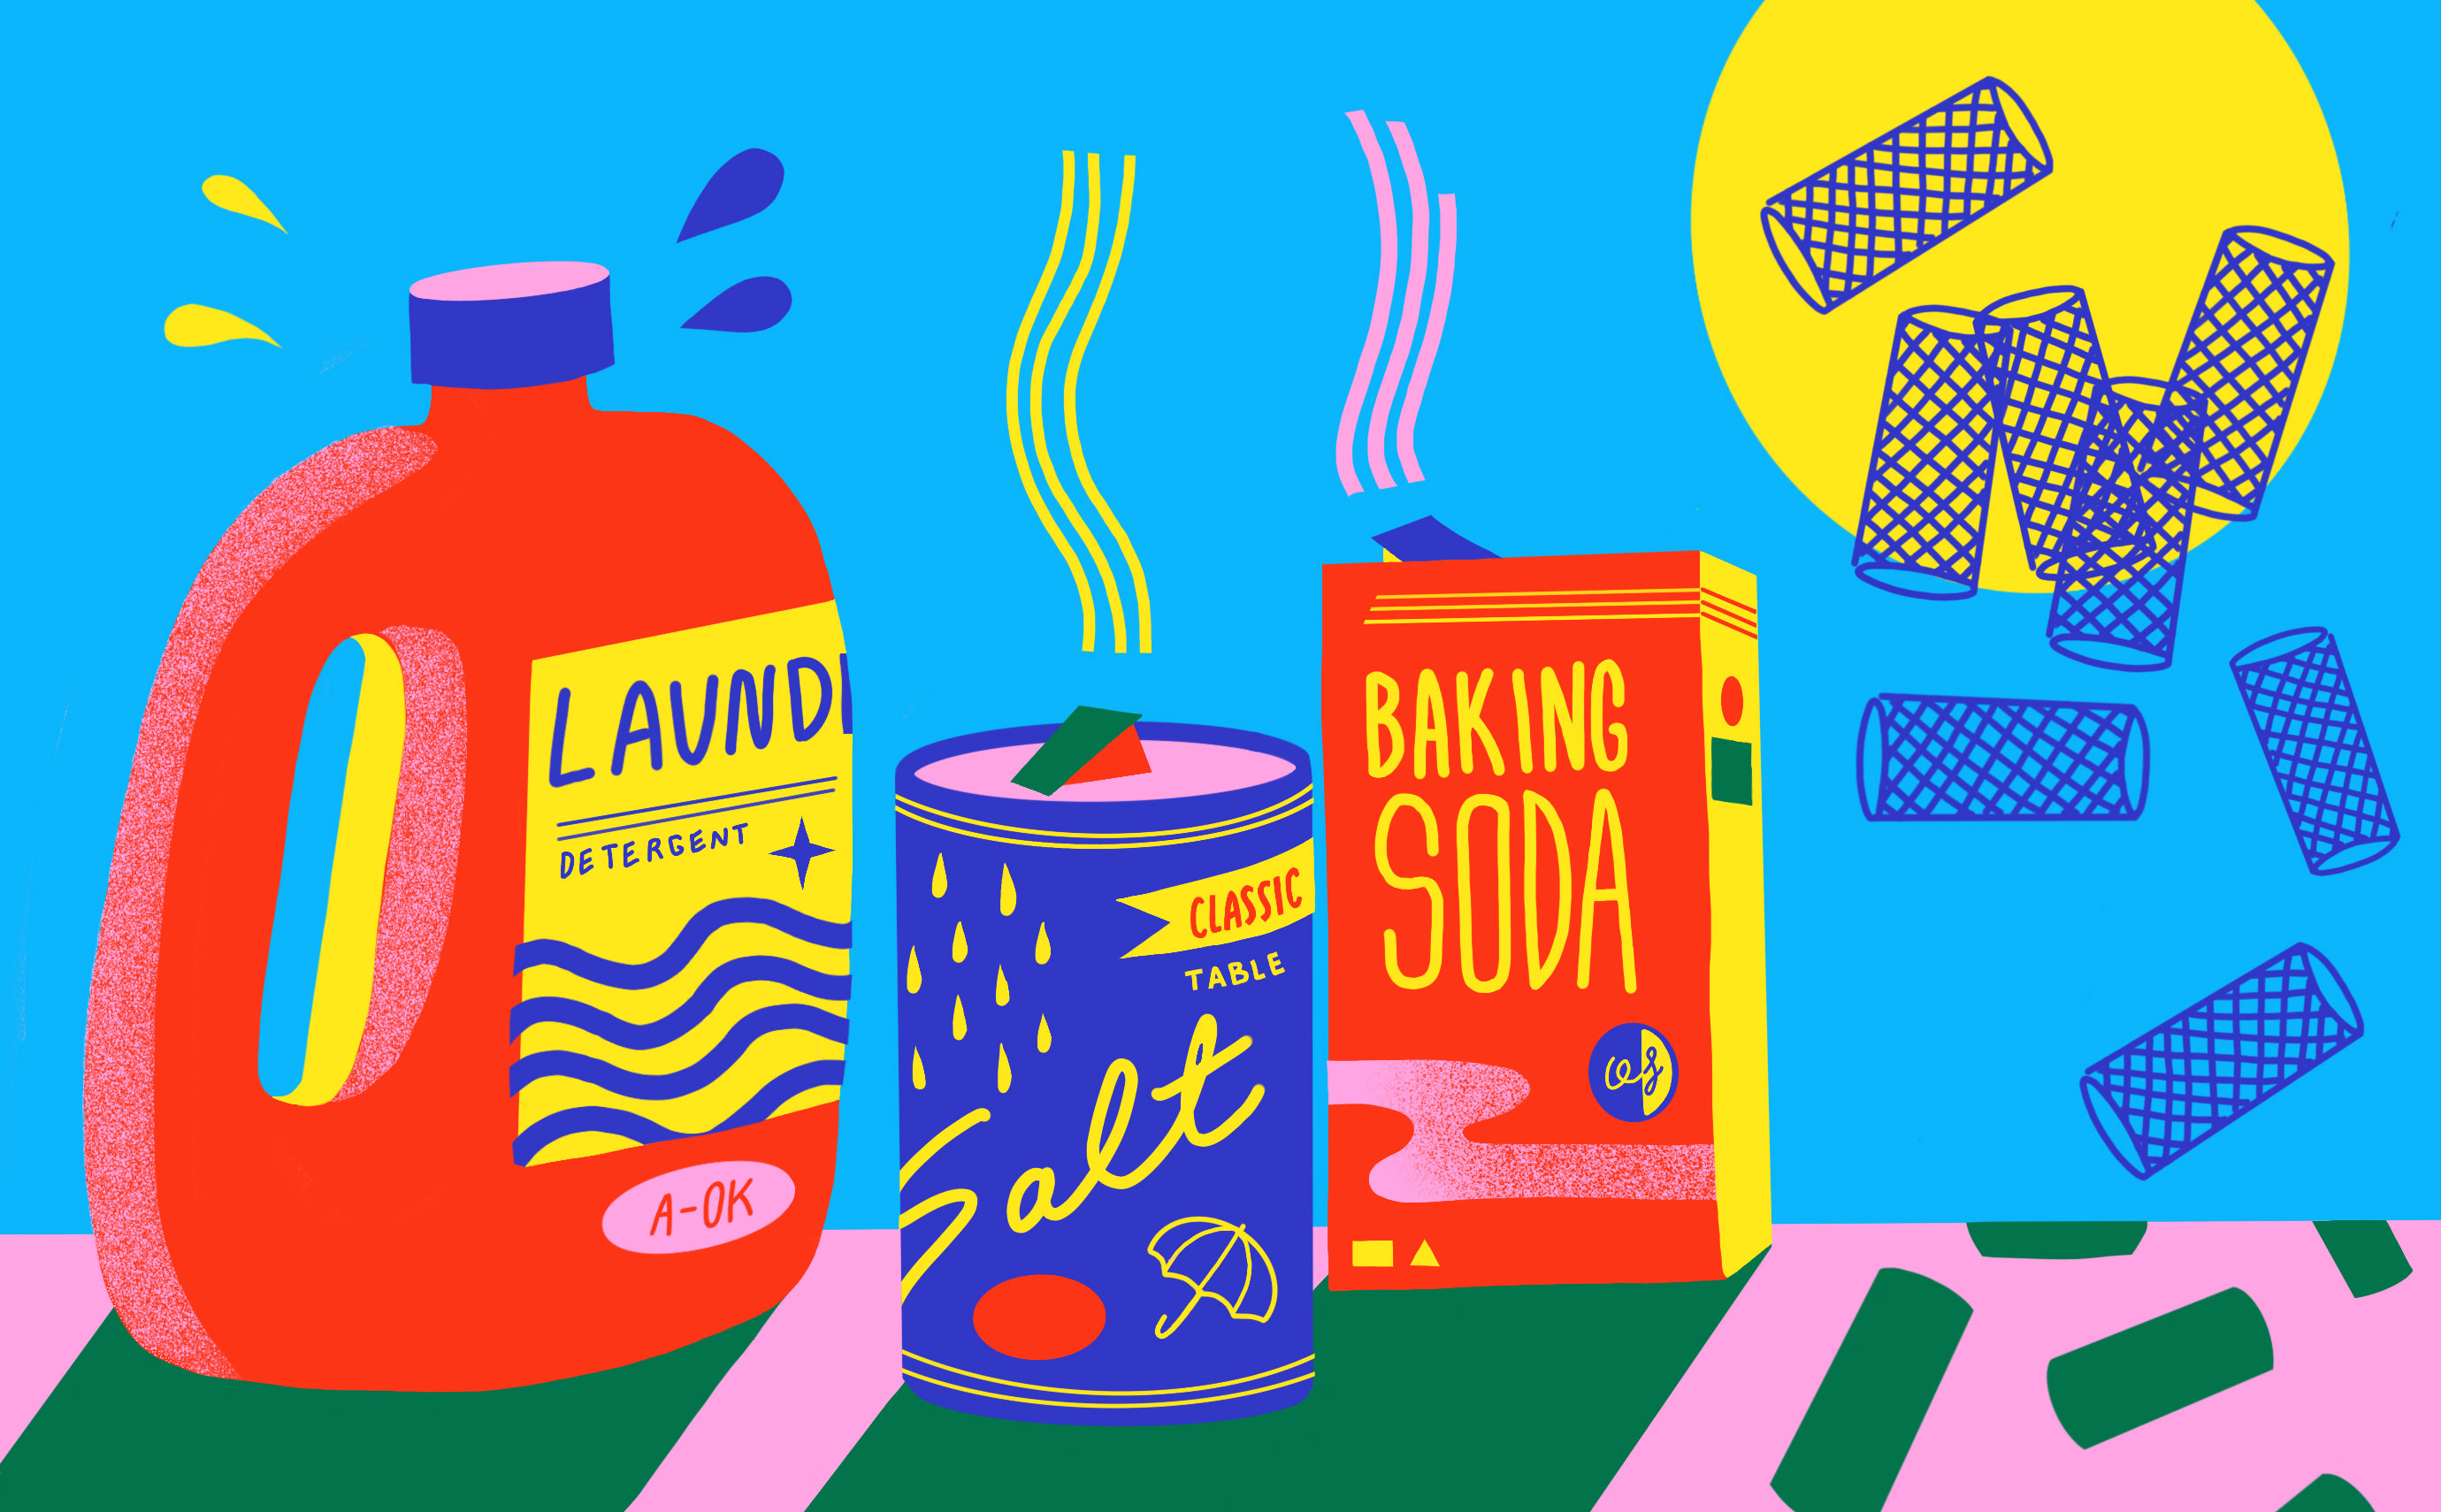 An illustration of laundry detergent, salt, baking soda, and nano tubes